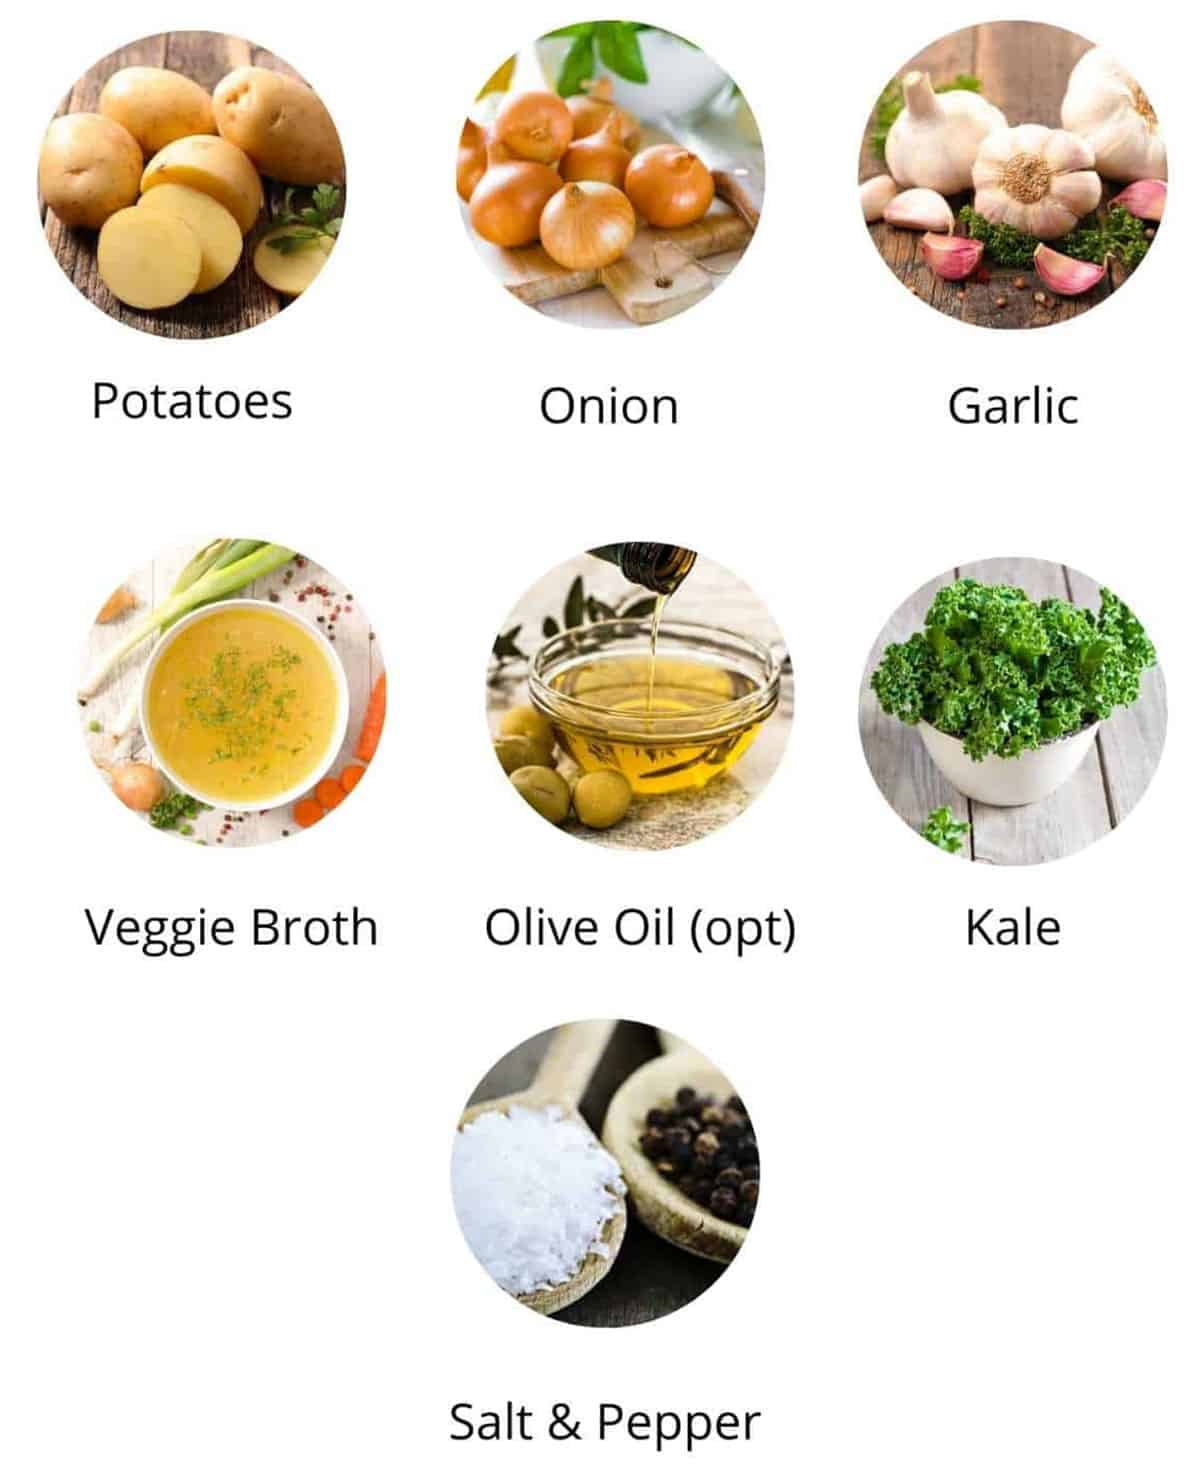 vegan potato leek soup ingredients.